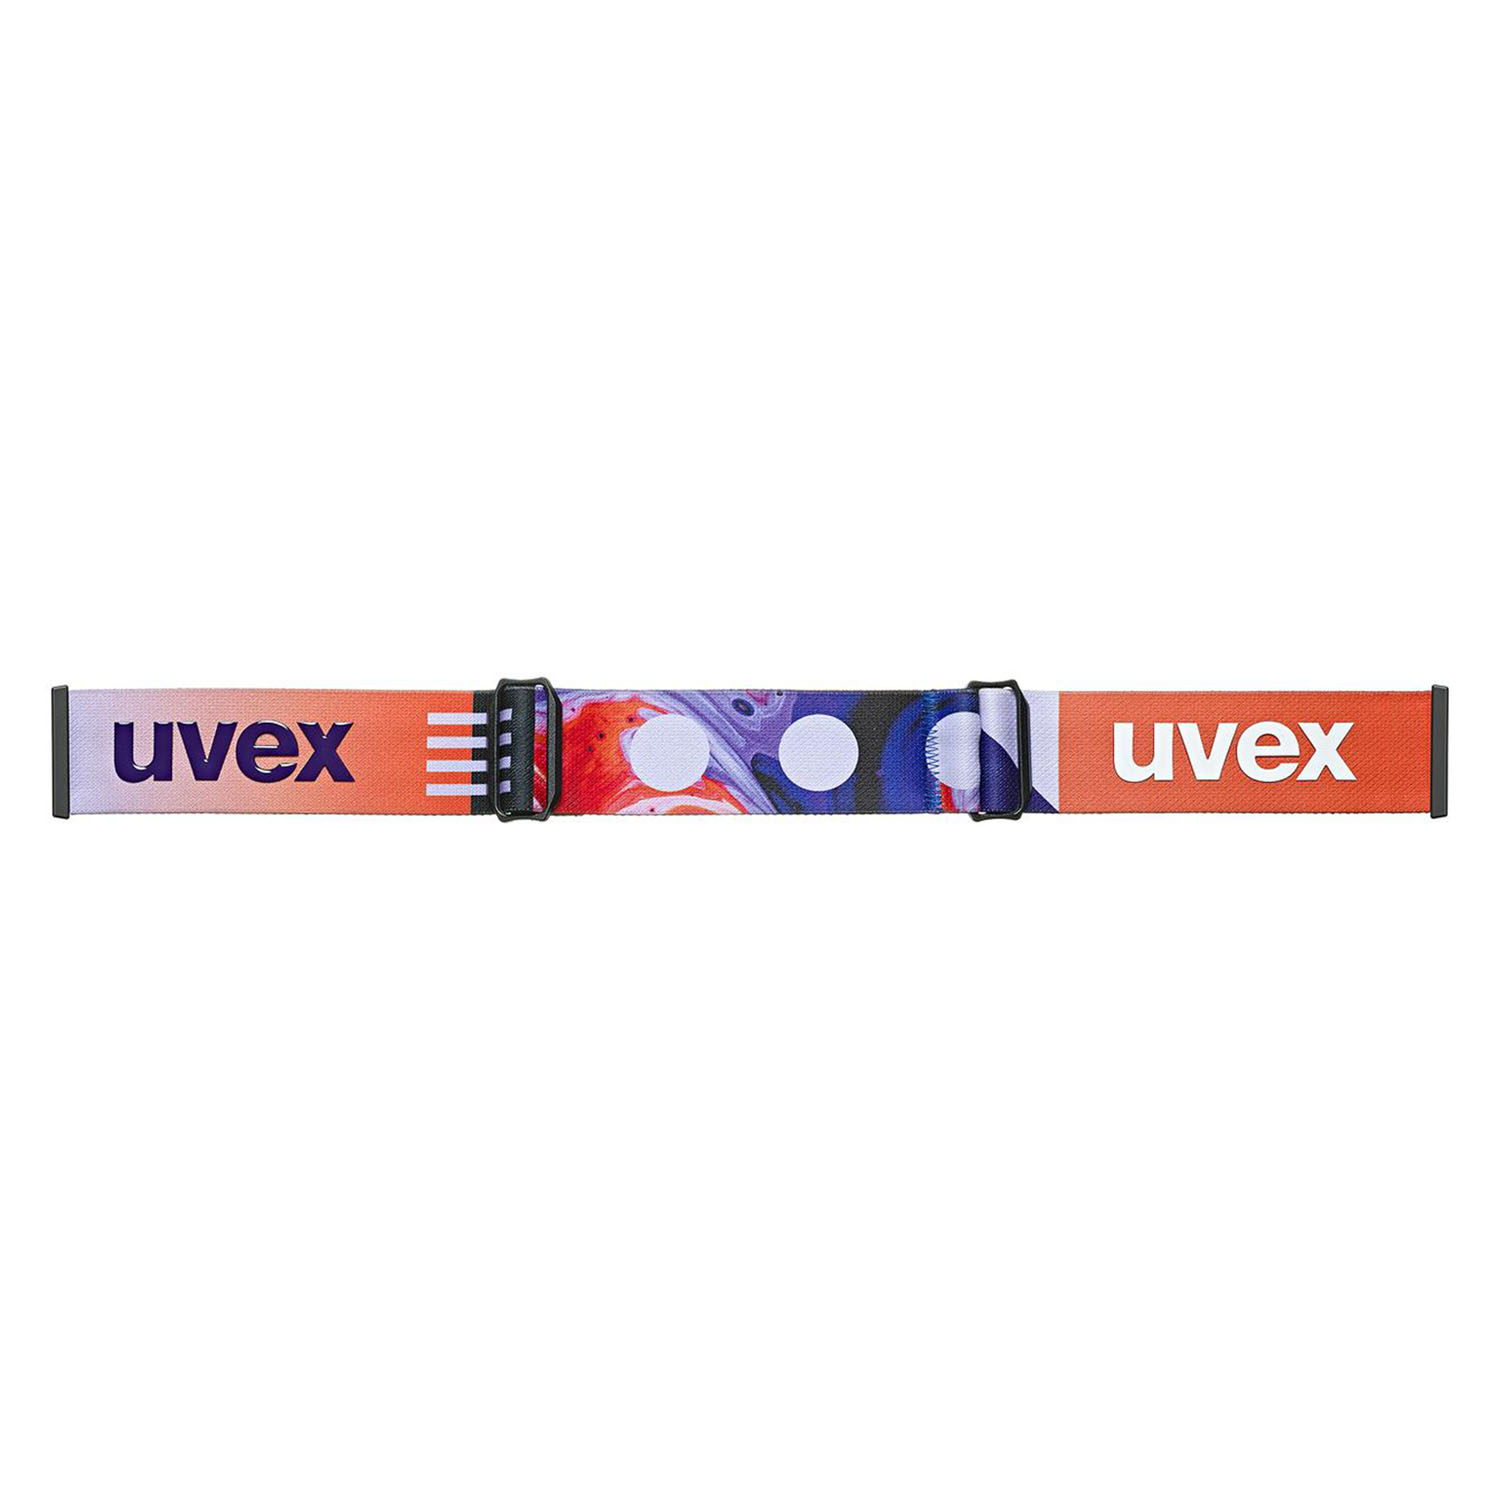 Очки горнолыжные UVEX Evidnt Attract Purple Dl/Fm Ruby-Green